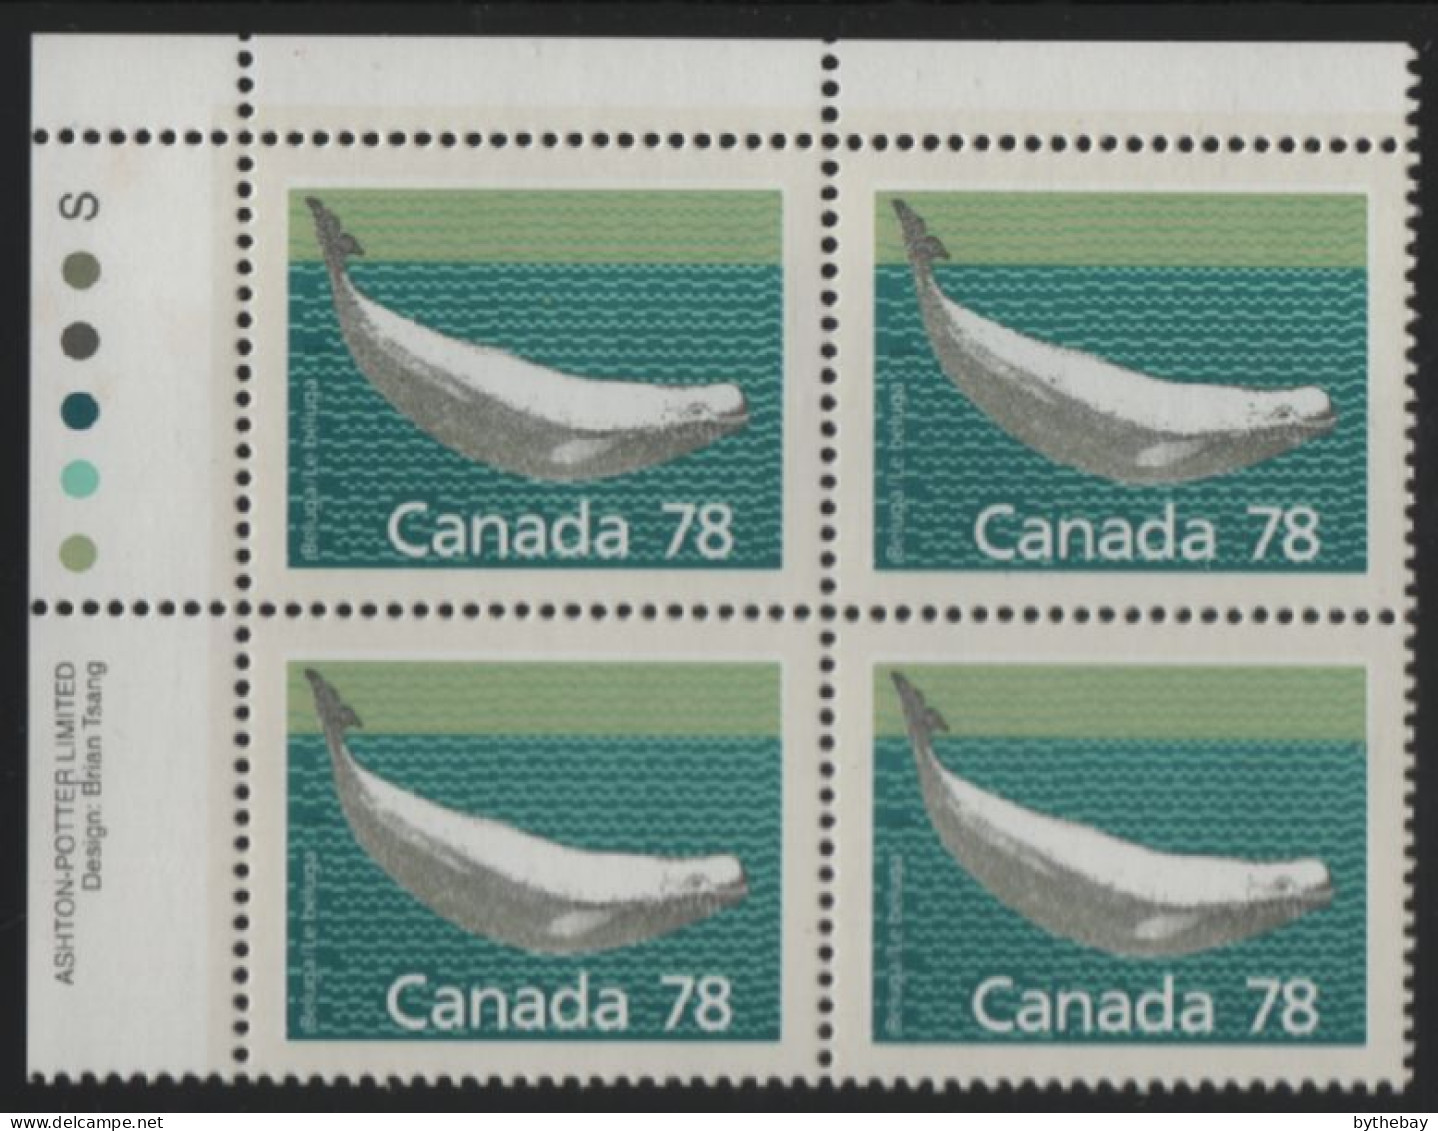 Canada 1988-92 MNH Sc 1179 78c Beluga Whale UL Plate Block - Plate Number & Inscriptions